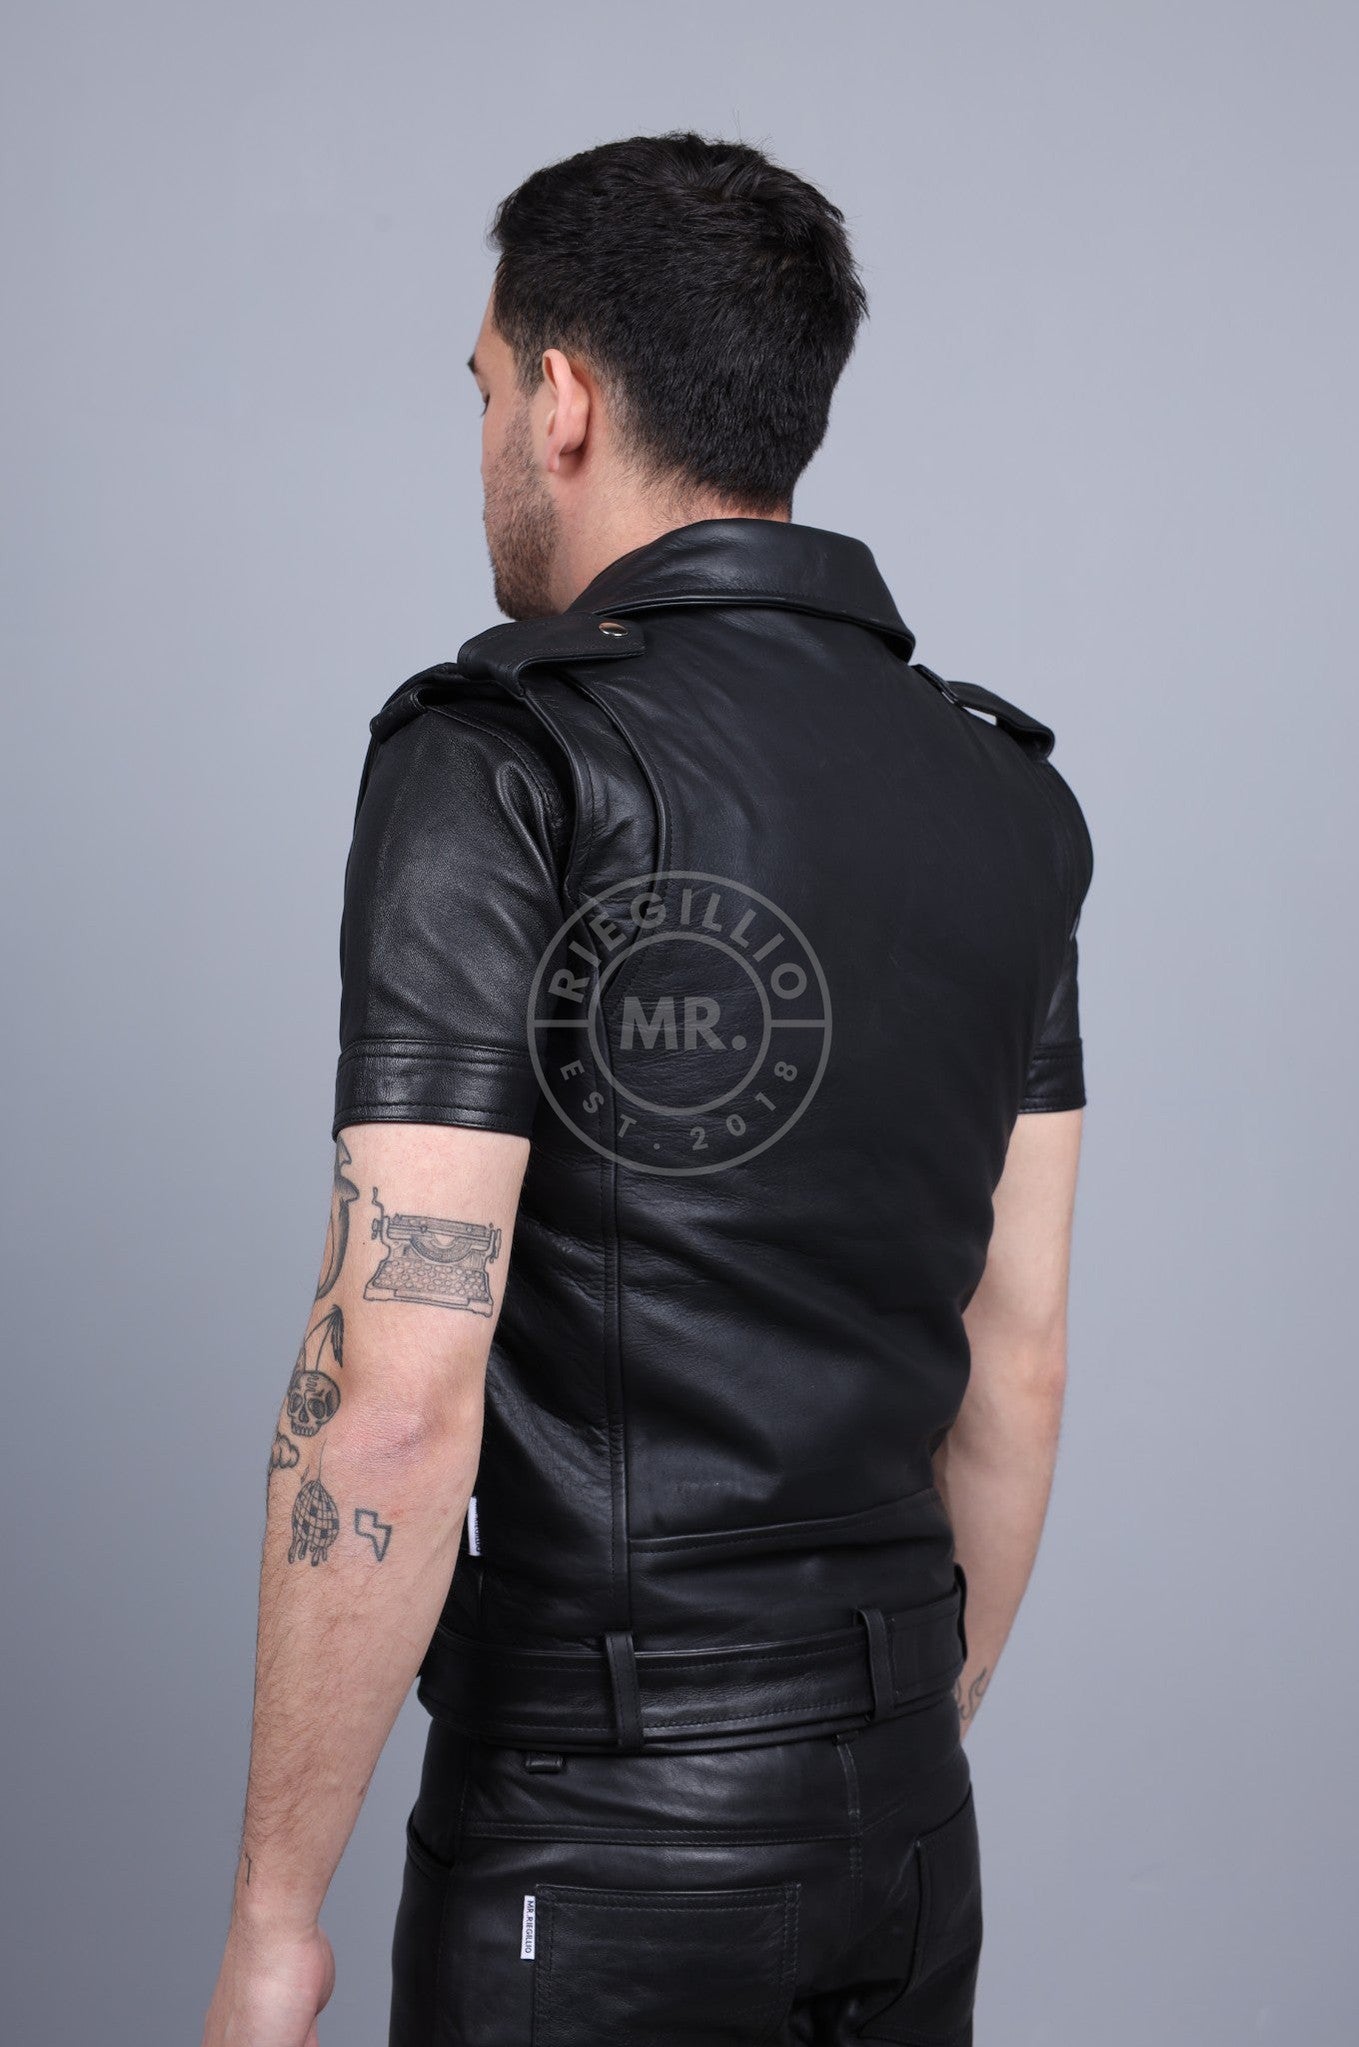 Leather Brando Sleeveless Jacket at MR. Riegillio